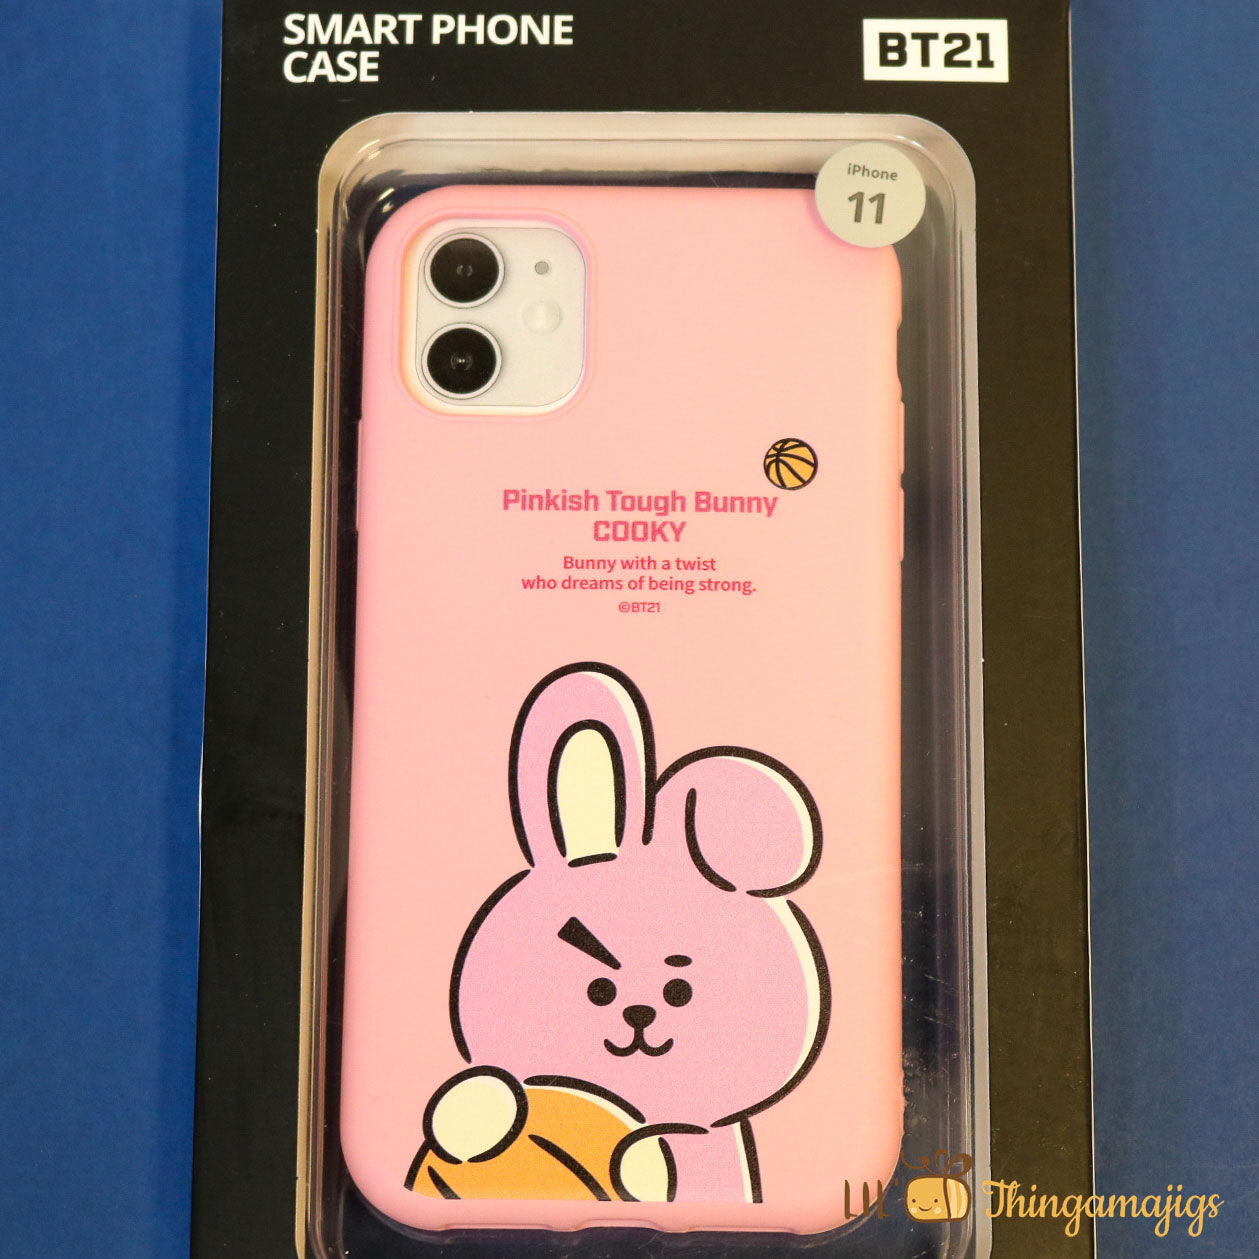 BT21 Iphone 11 Phone Case